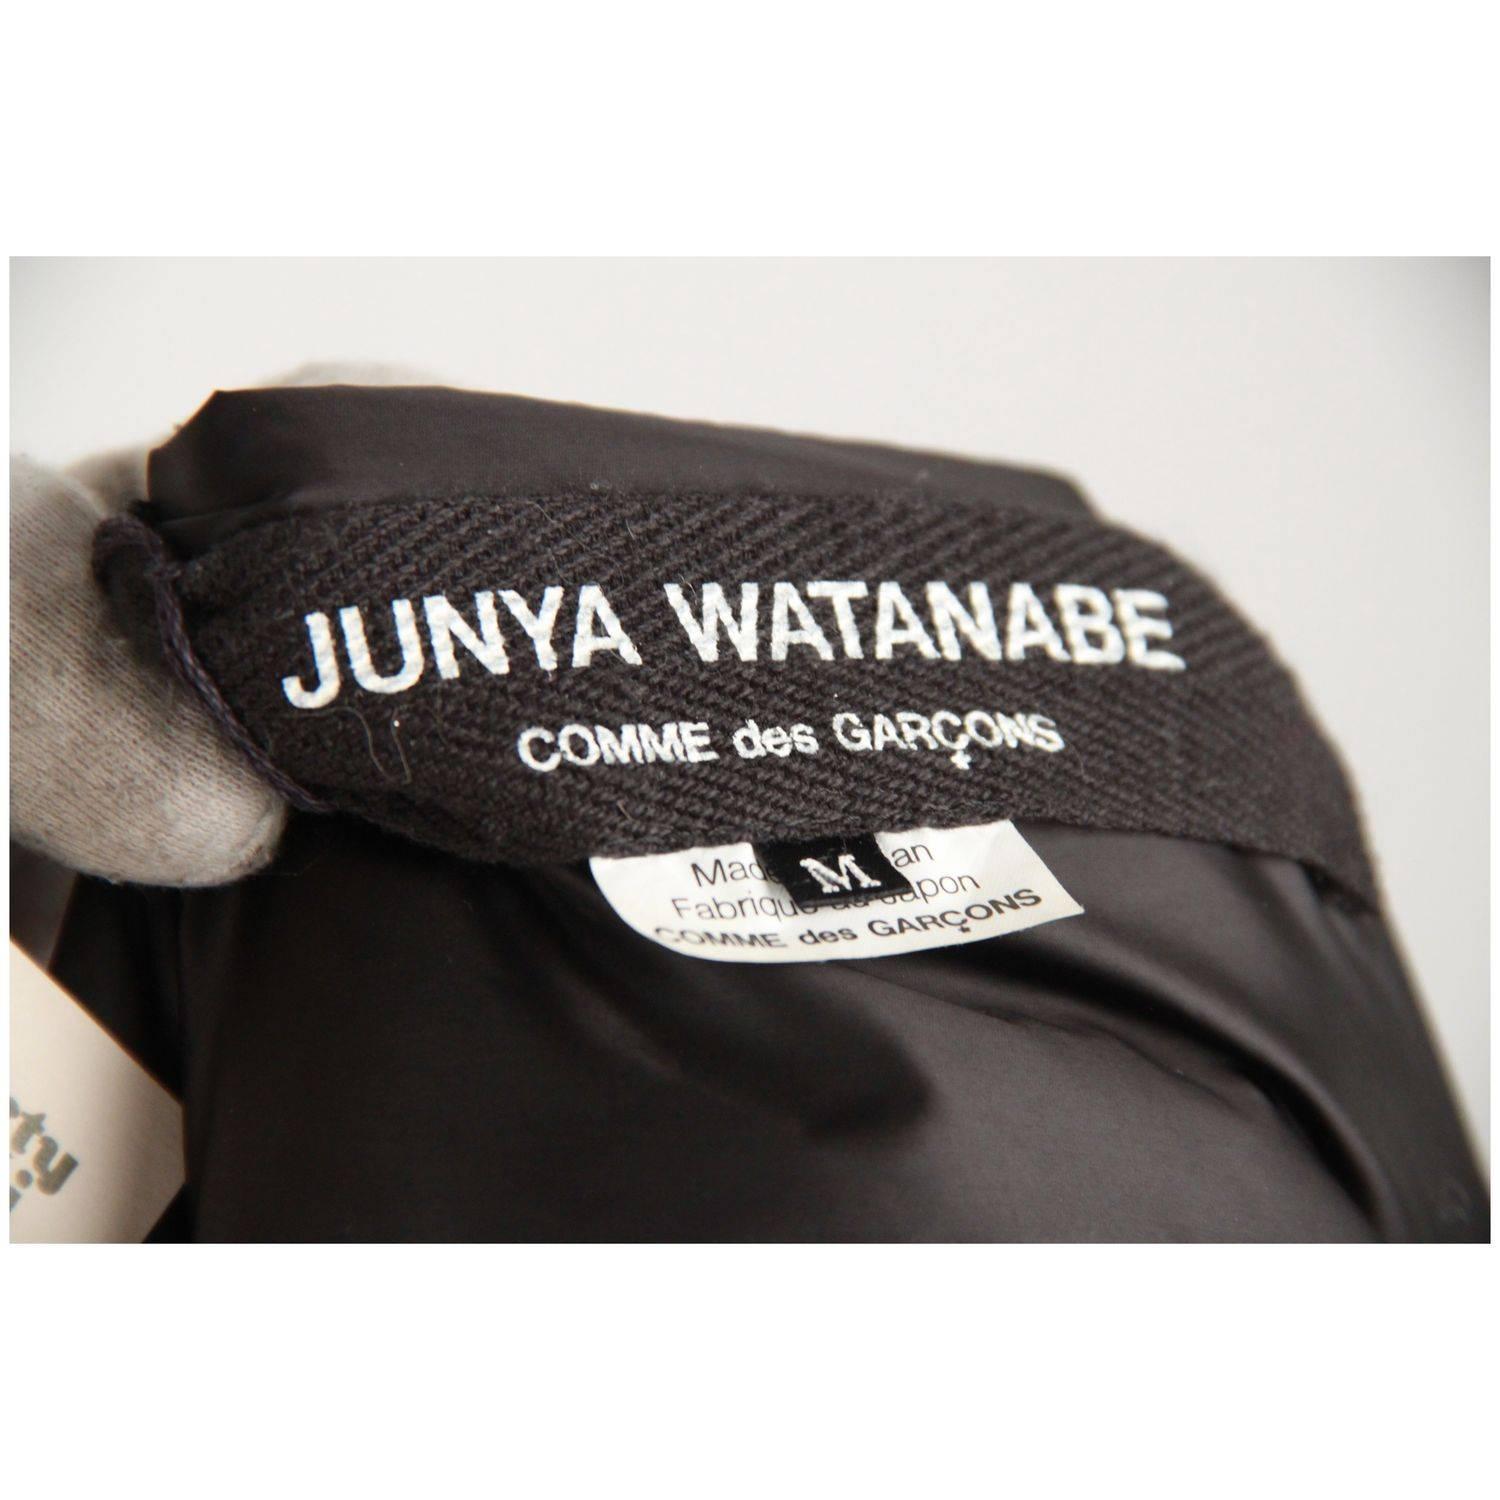 JUNIA WATANABE COMME DES GARCONS Black Nylon DOWN JACKET Size M 4